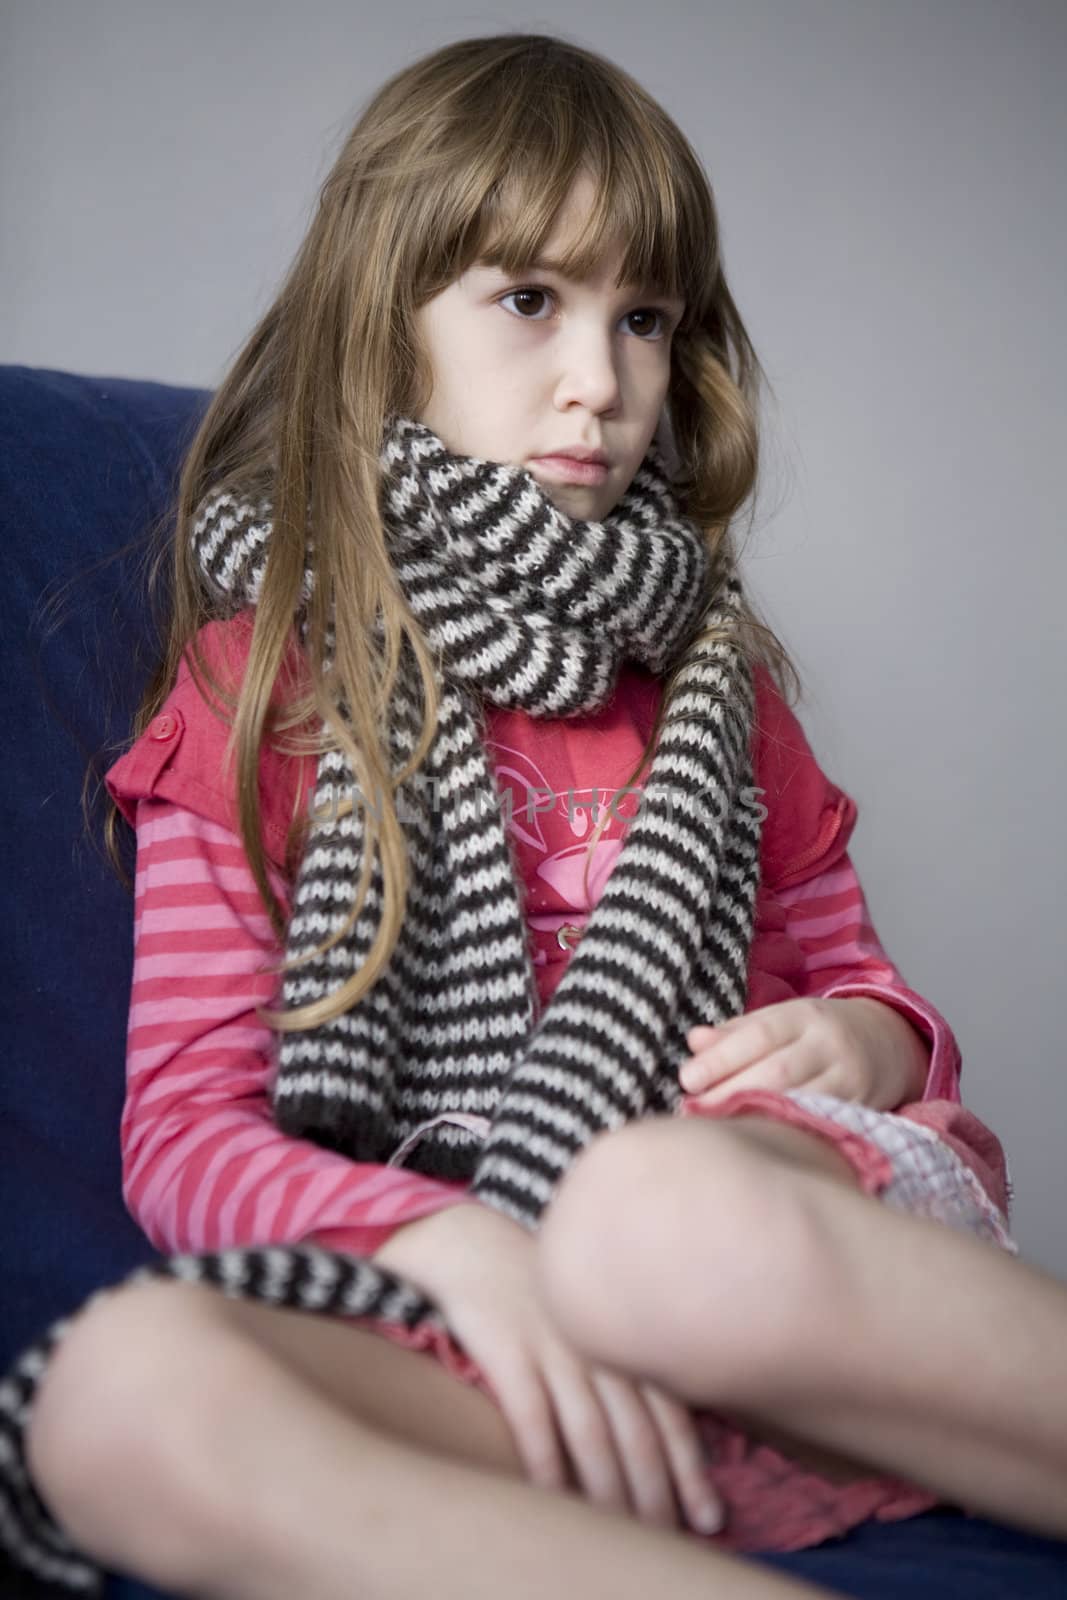 Llittle cute sick girl with scarf. Sore throat